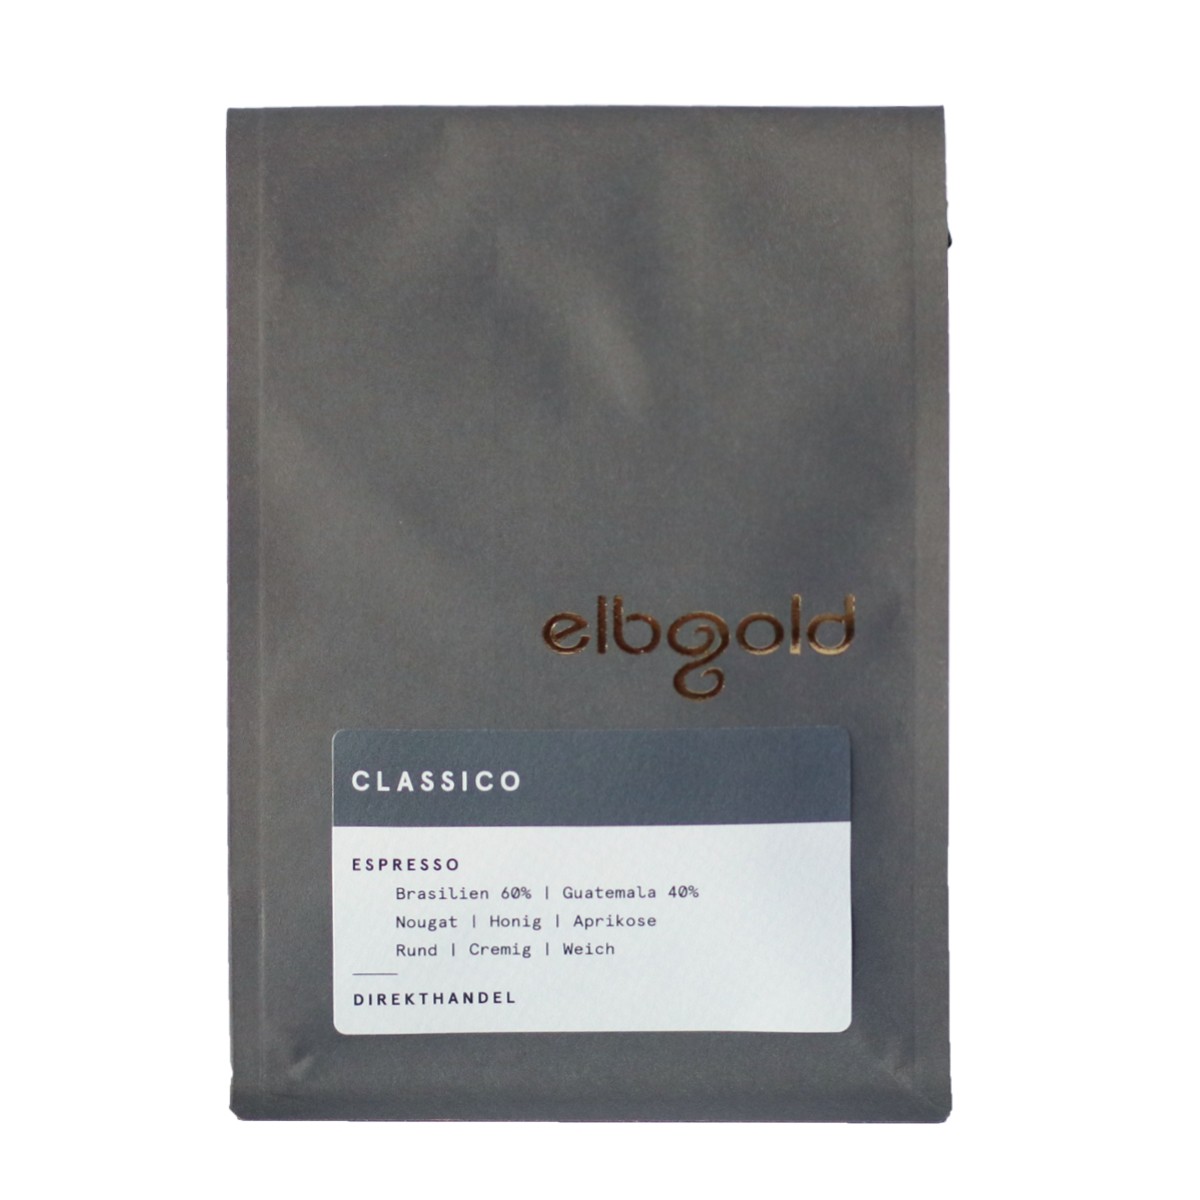 Elbgold Espresso Classico